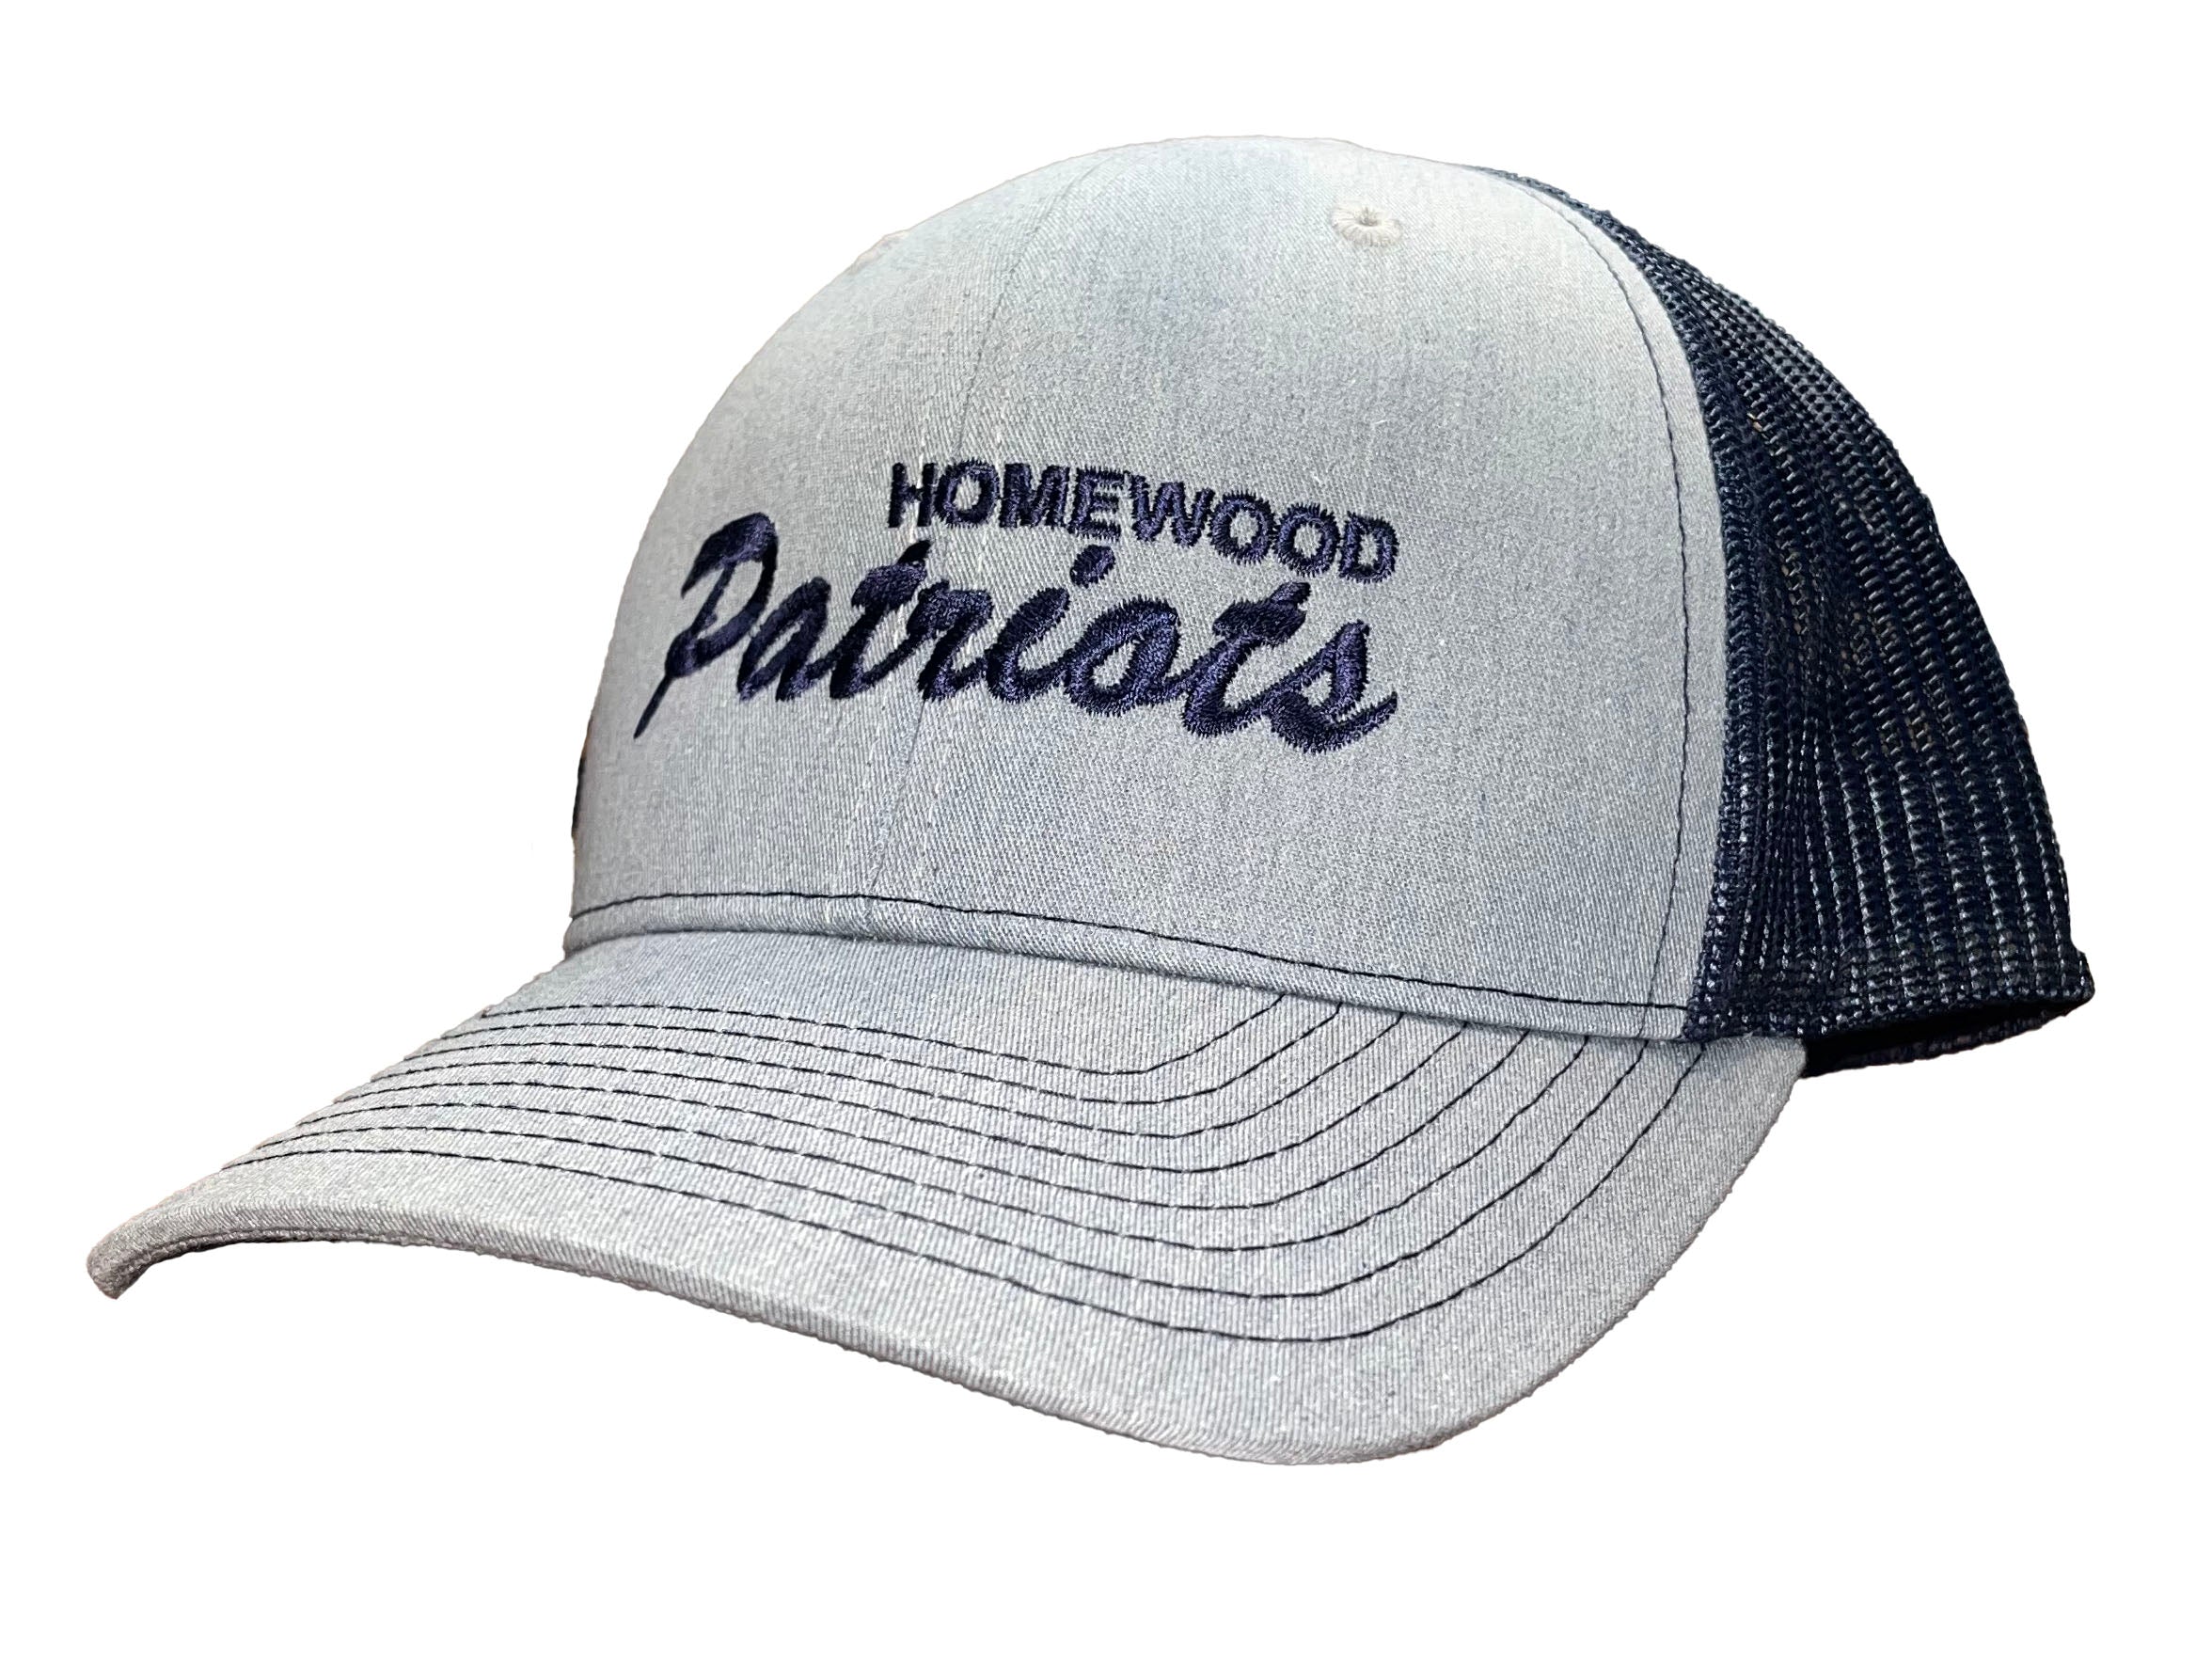 Homewood Patriots Trucker Hat